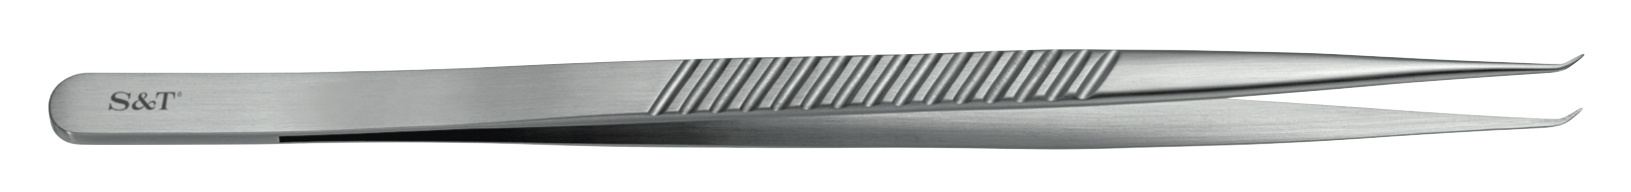 S&T Forceps By Banis 18cm JFAL-3-18 B Flat Handle 0.3mm Angulated 40 Degree Tip